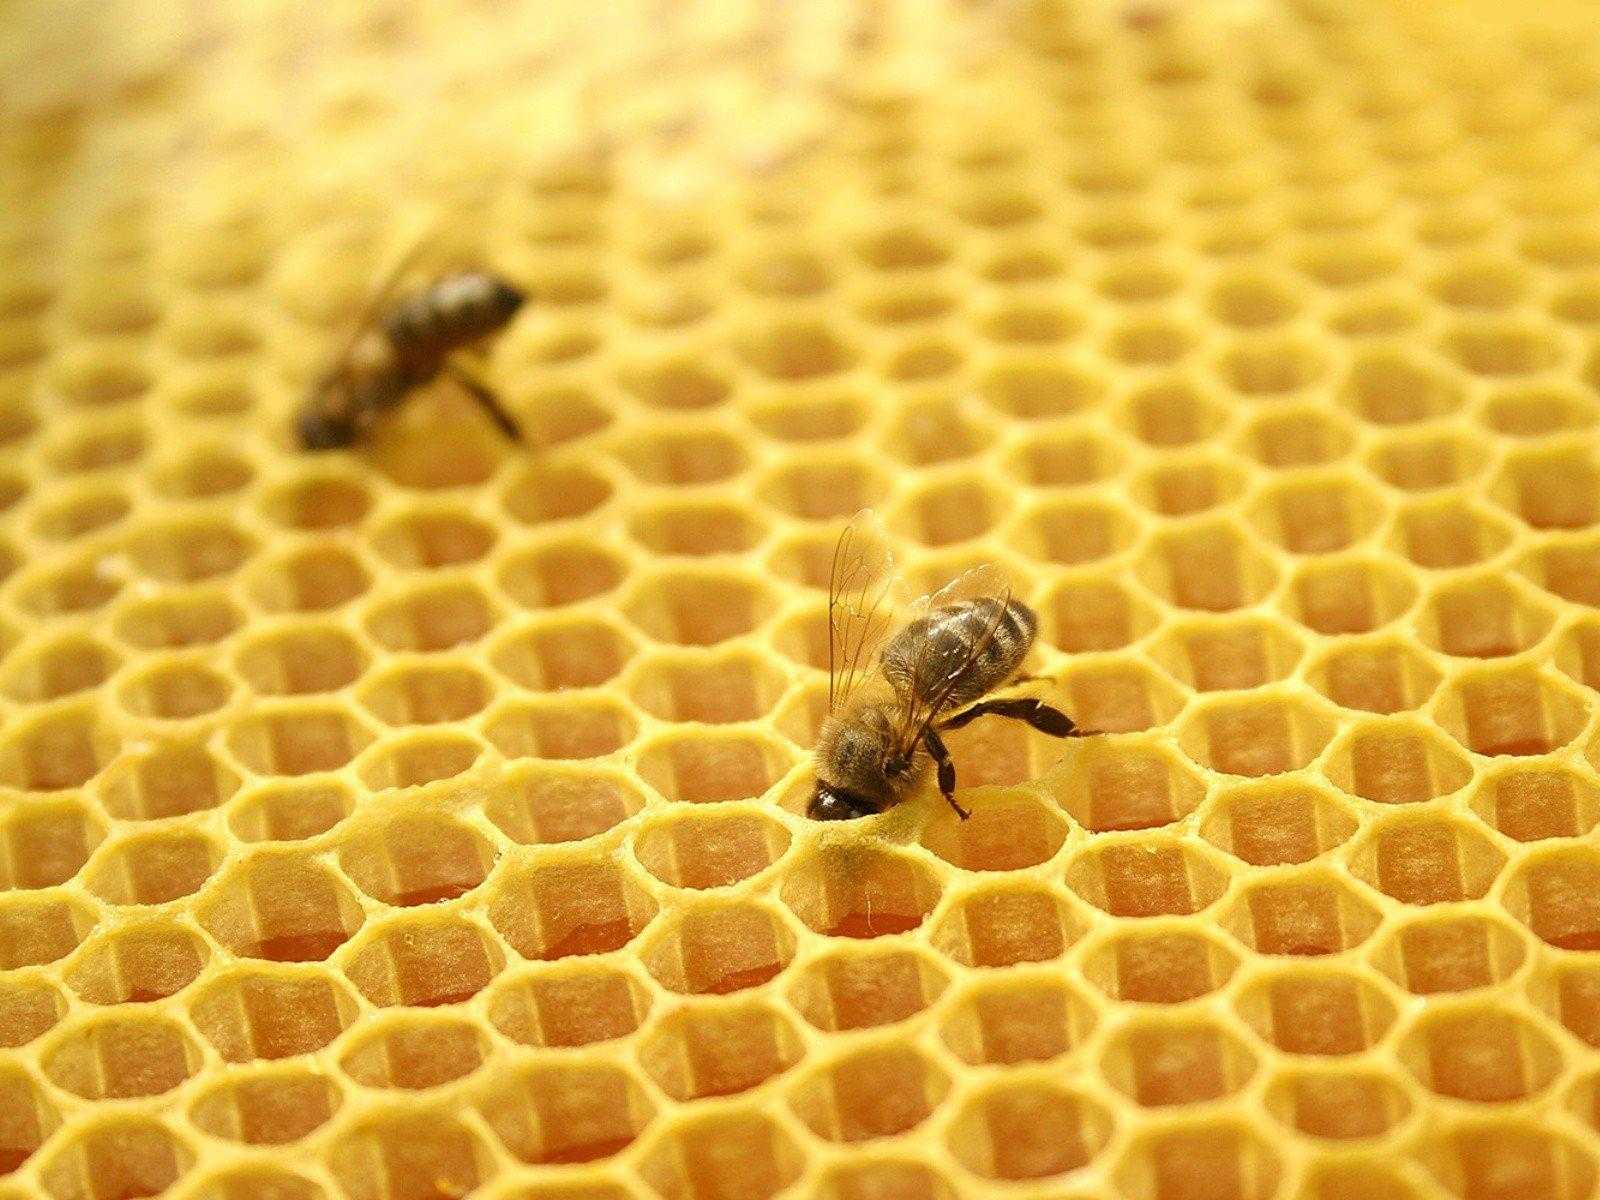 Пчеловодство как бизнес: план и рекомендации, преимущества и недостатки